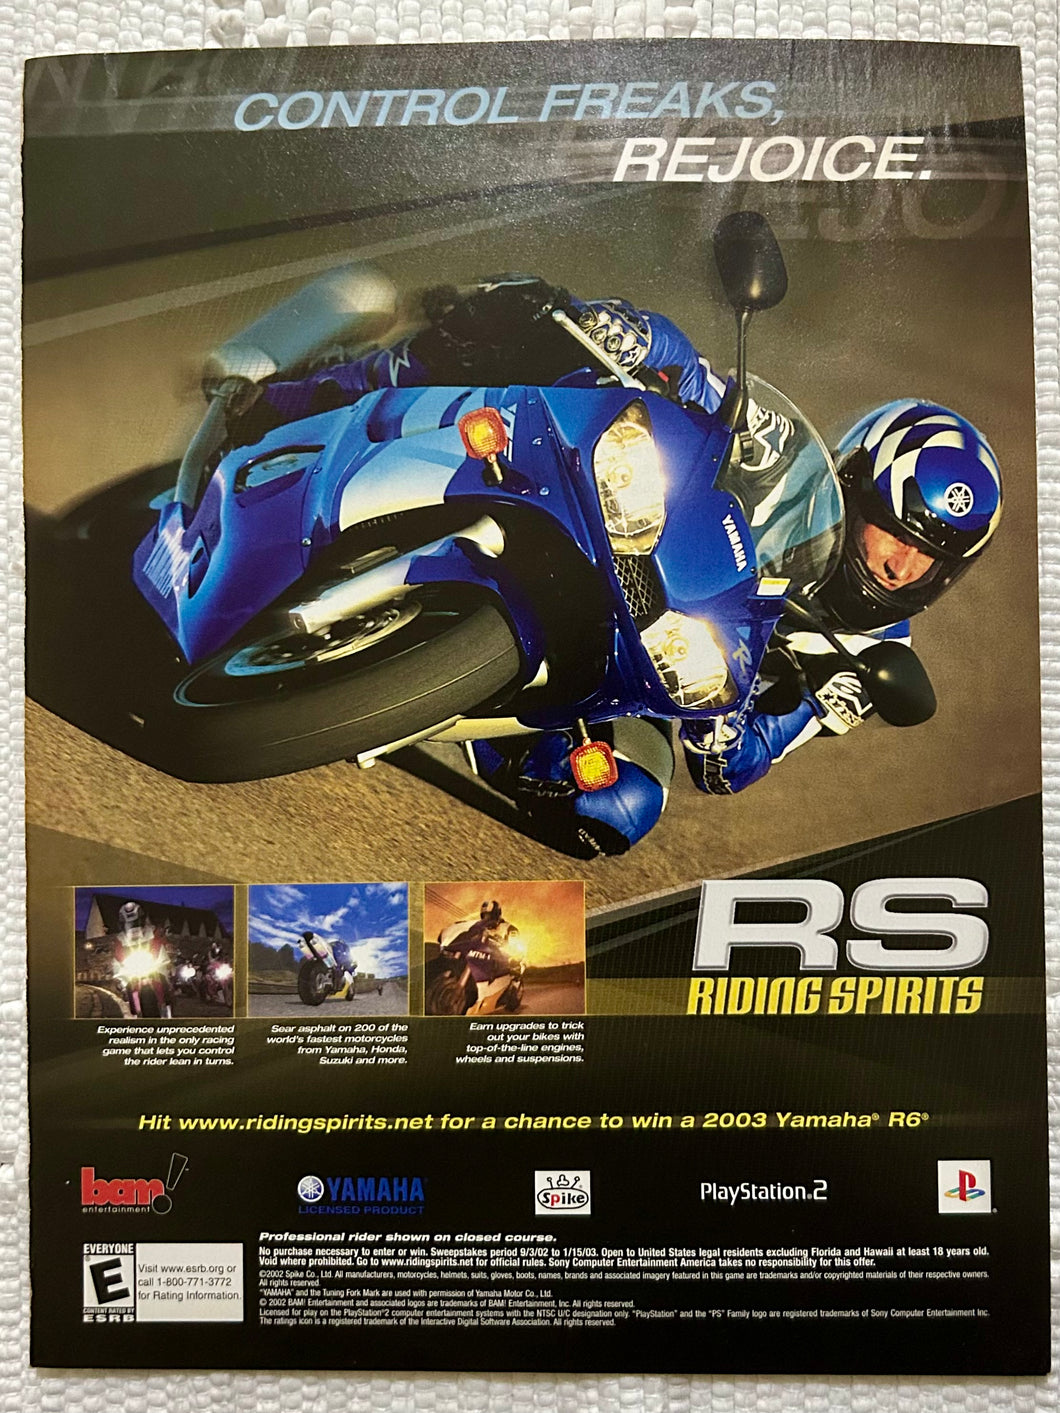 RS: Riding Spirits - PS2 - Original Vintage Advertisement - Print Ads - Laminated A4 Poster